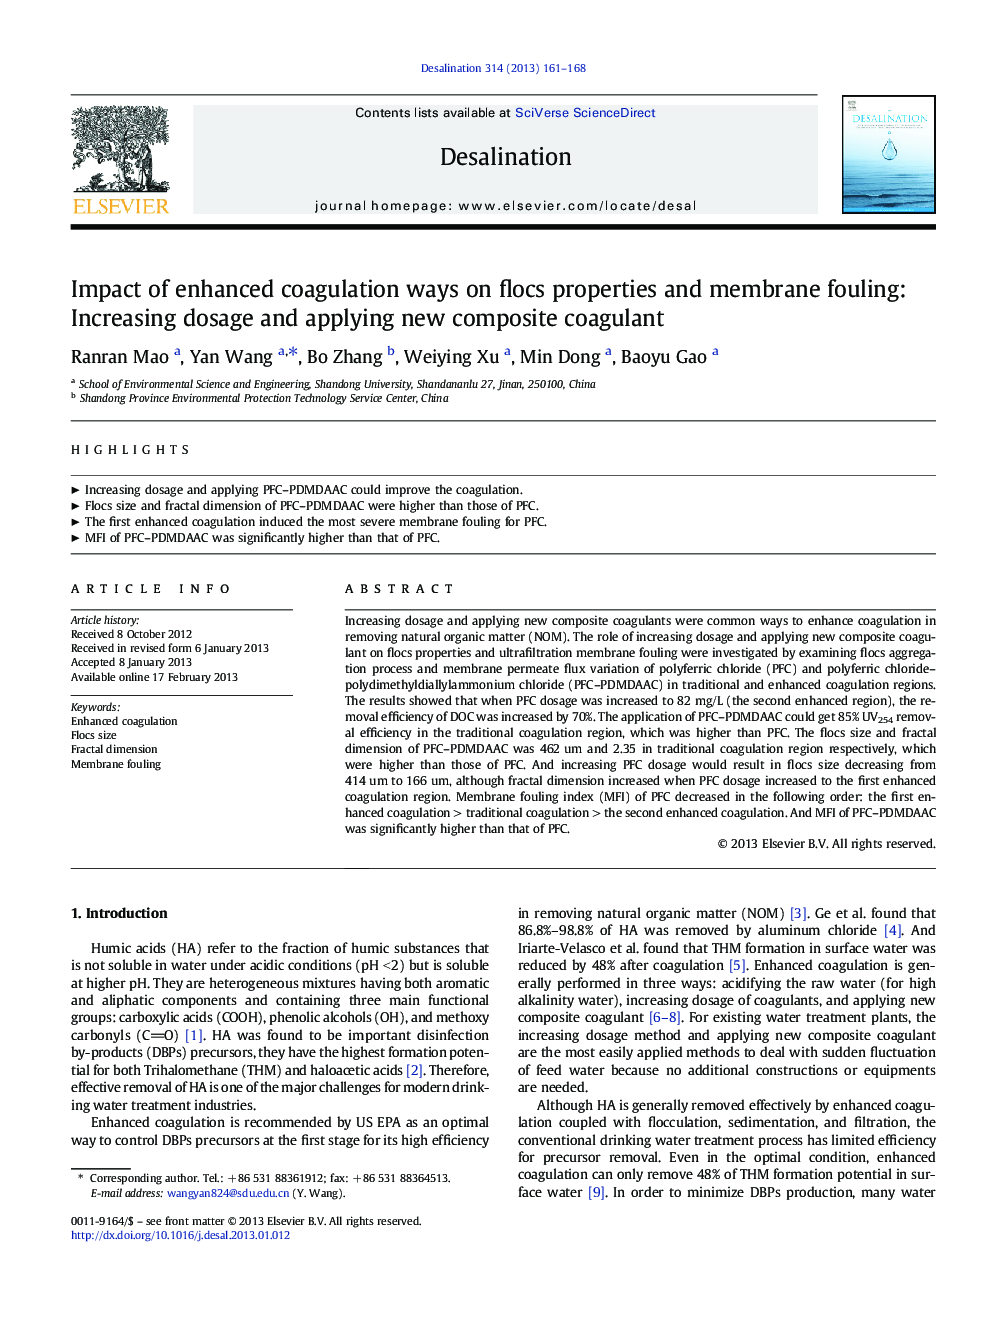 Impact of enhanced coagulation ways on flocs properties and membrane fouling: Increasing dosage and applying new composite coagulant